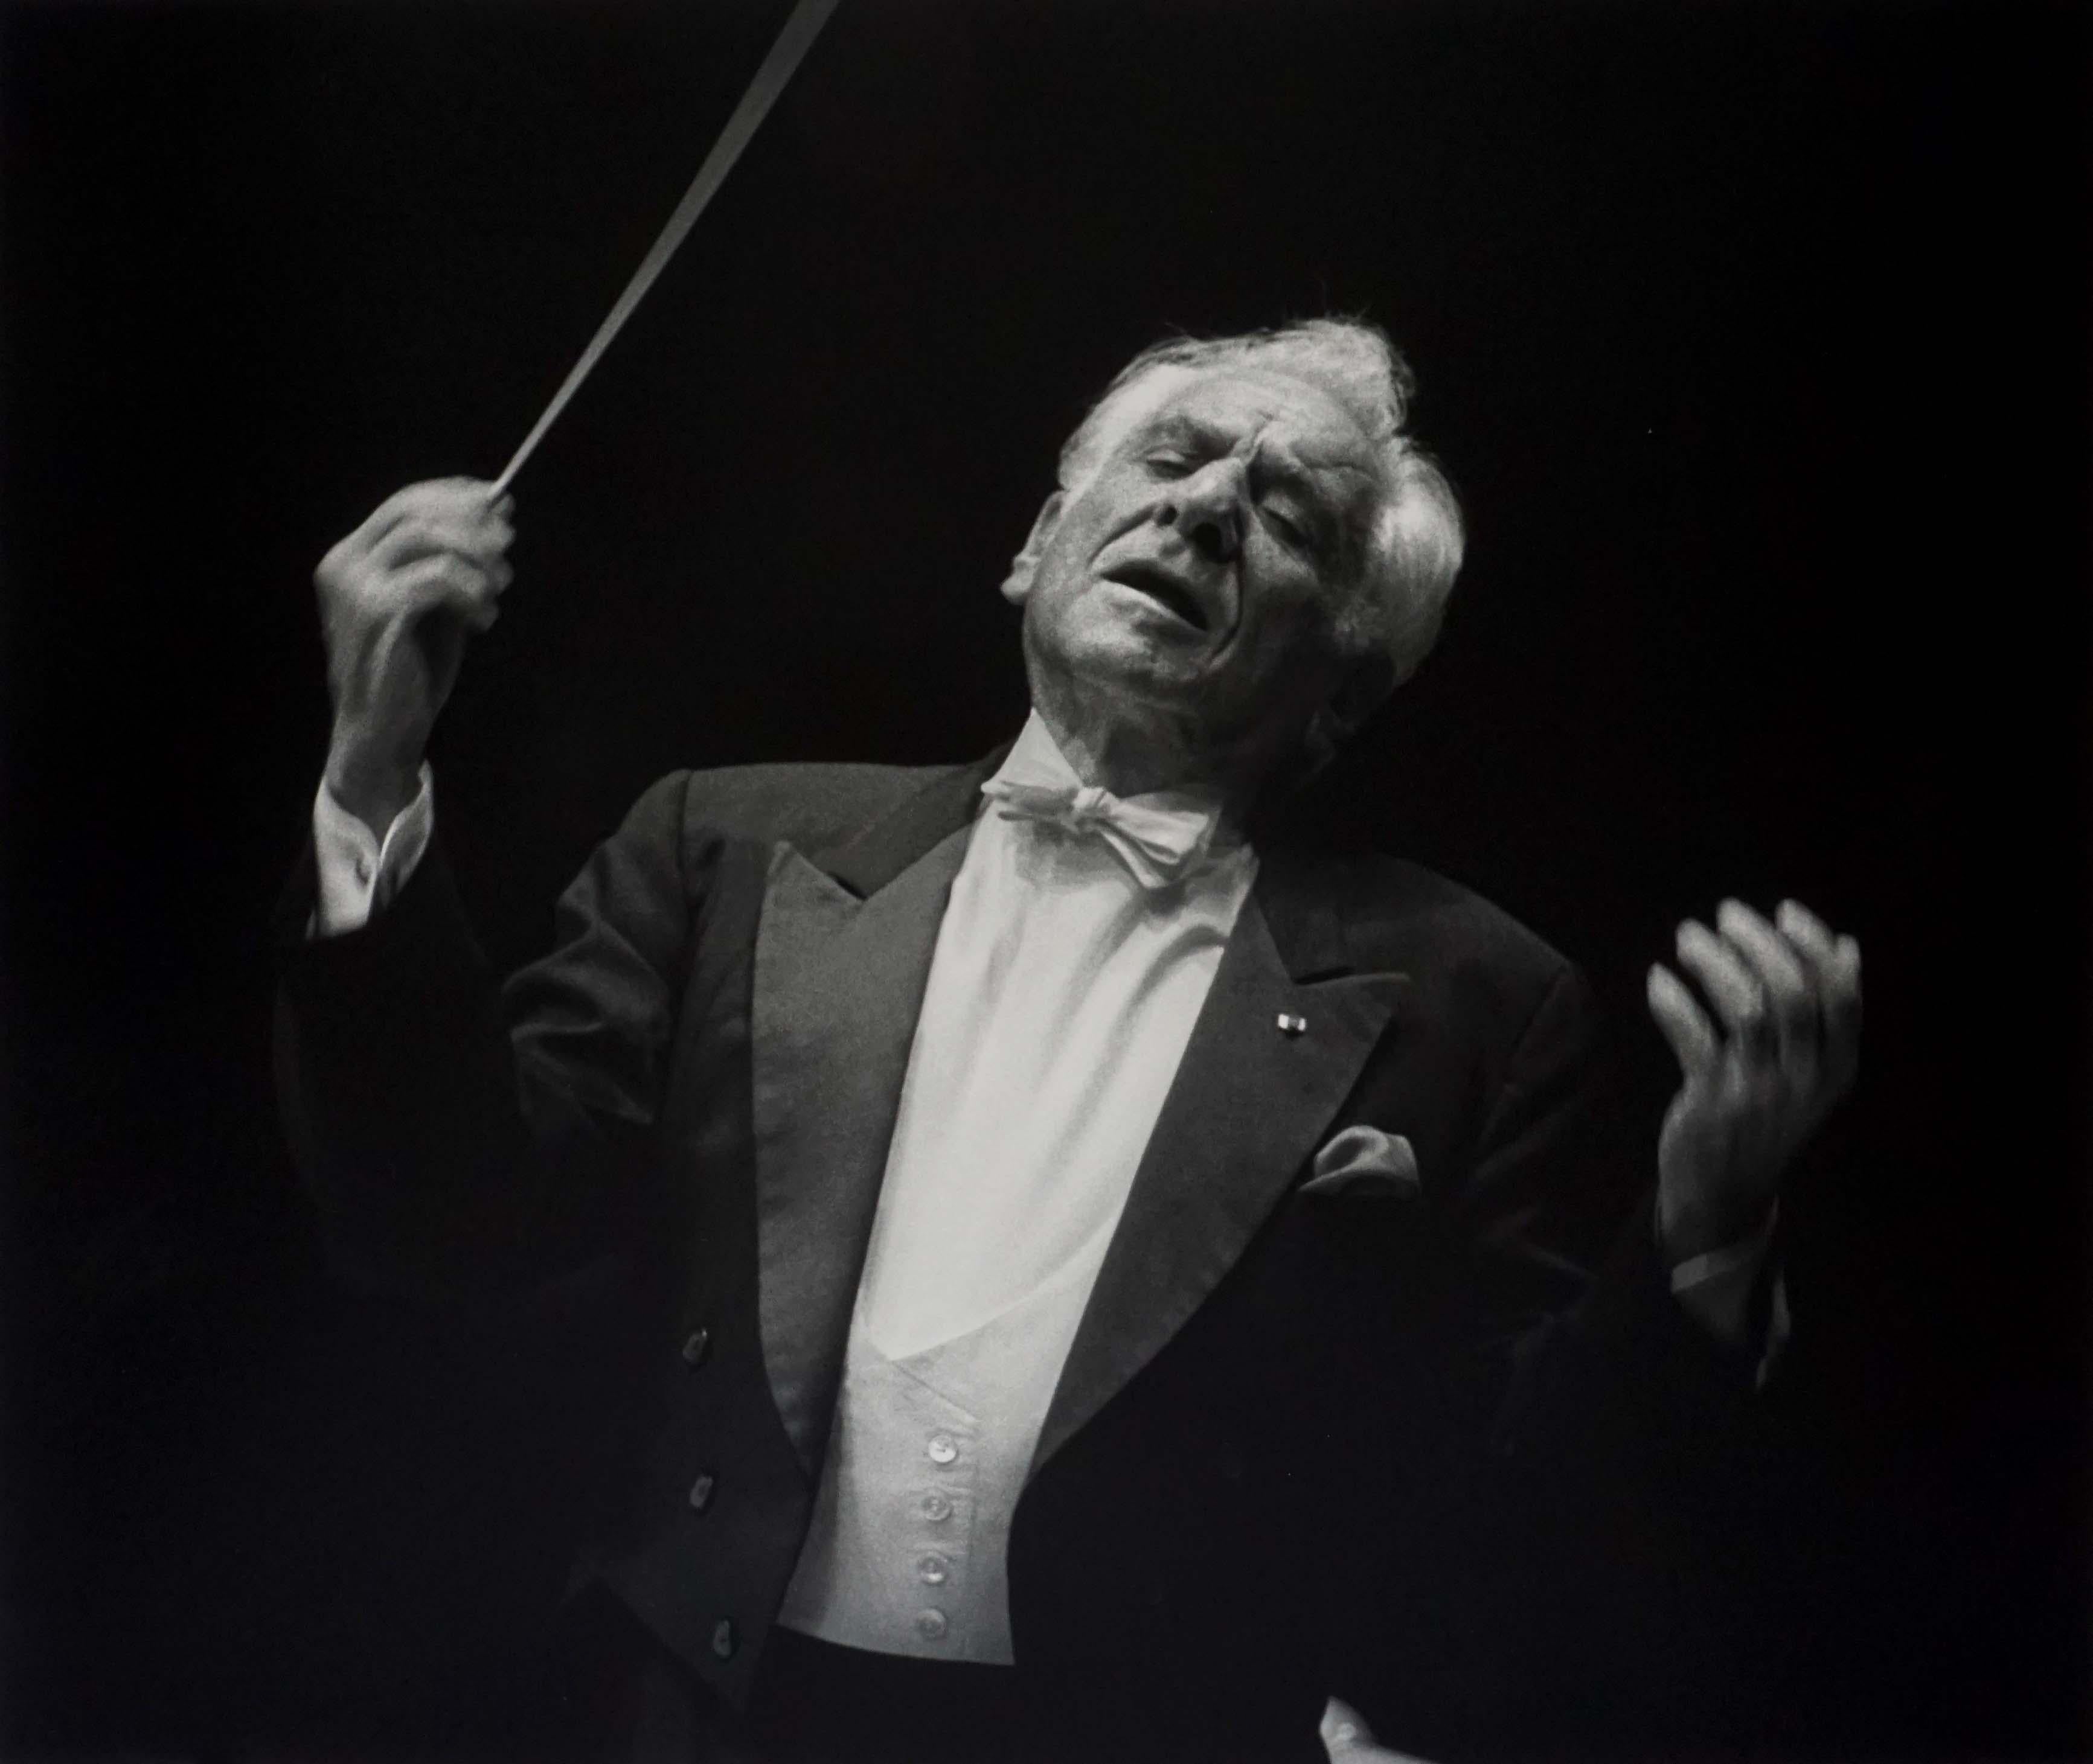 Steve J. Sherman Black and White Photograph - Leonard Bernstein conducting Vienna Philharmonic Orchestra, March 7, 1990